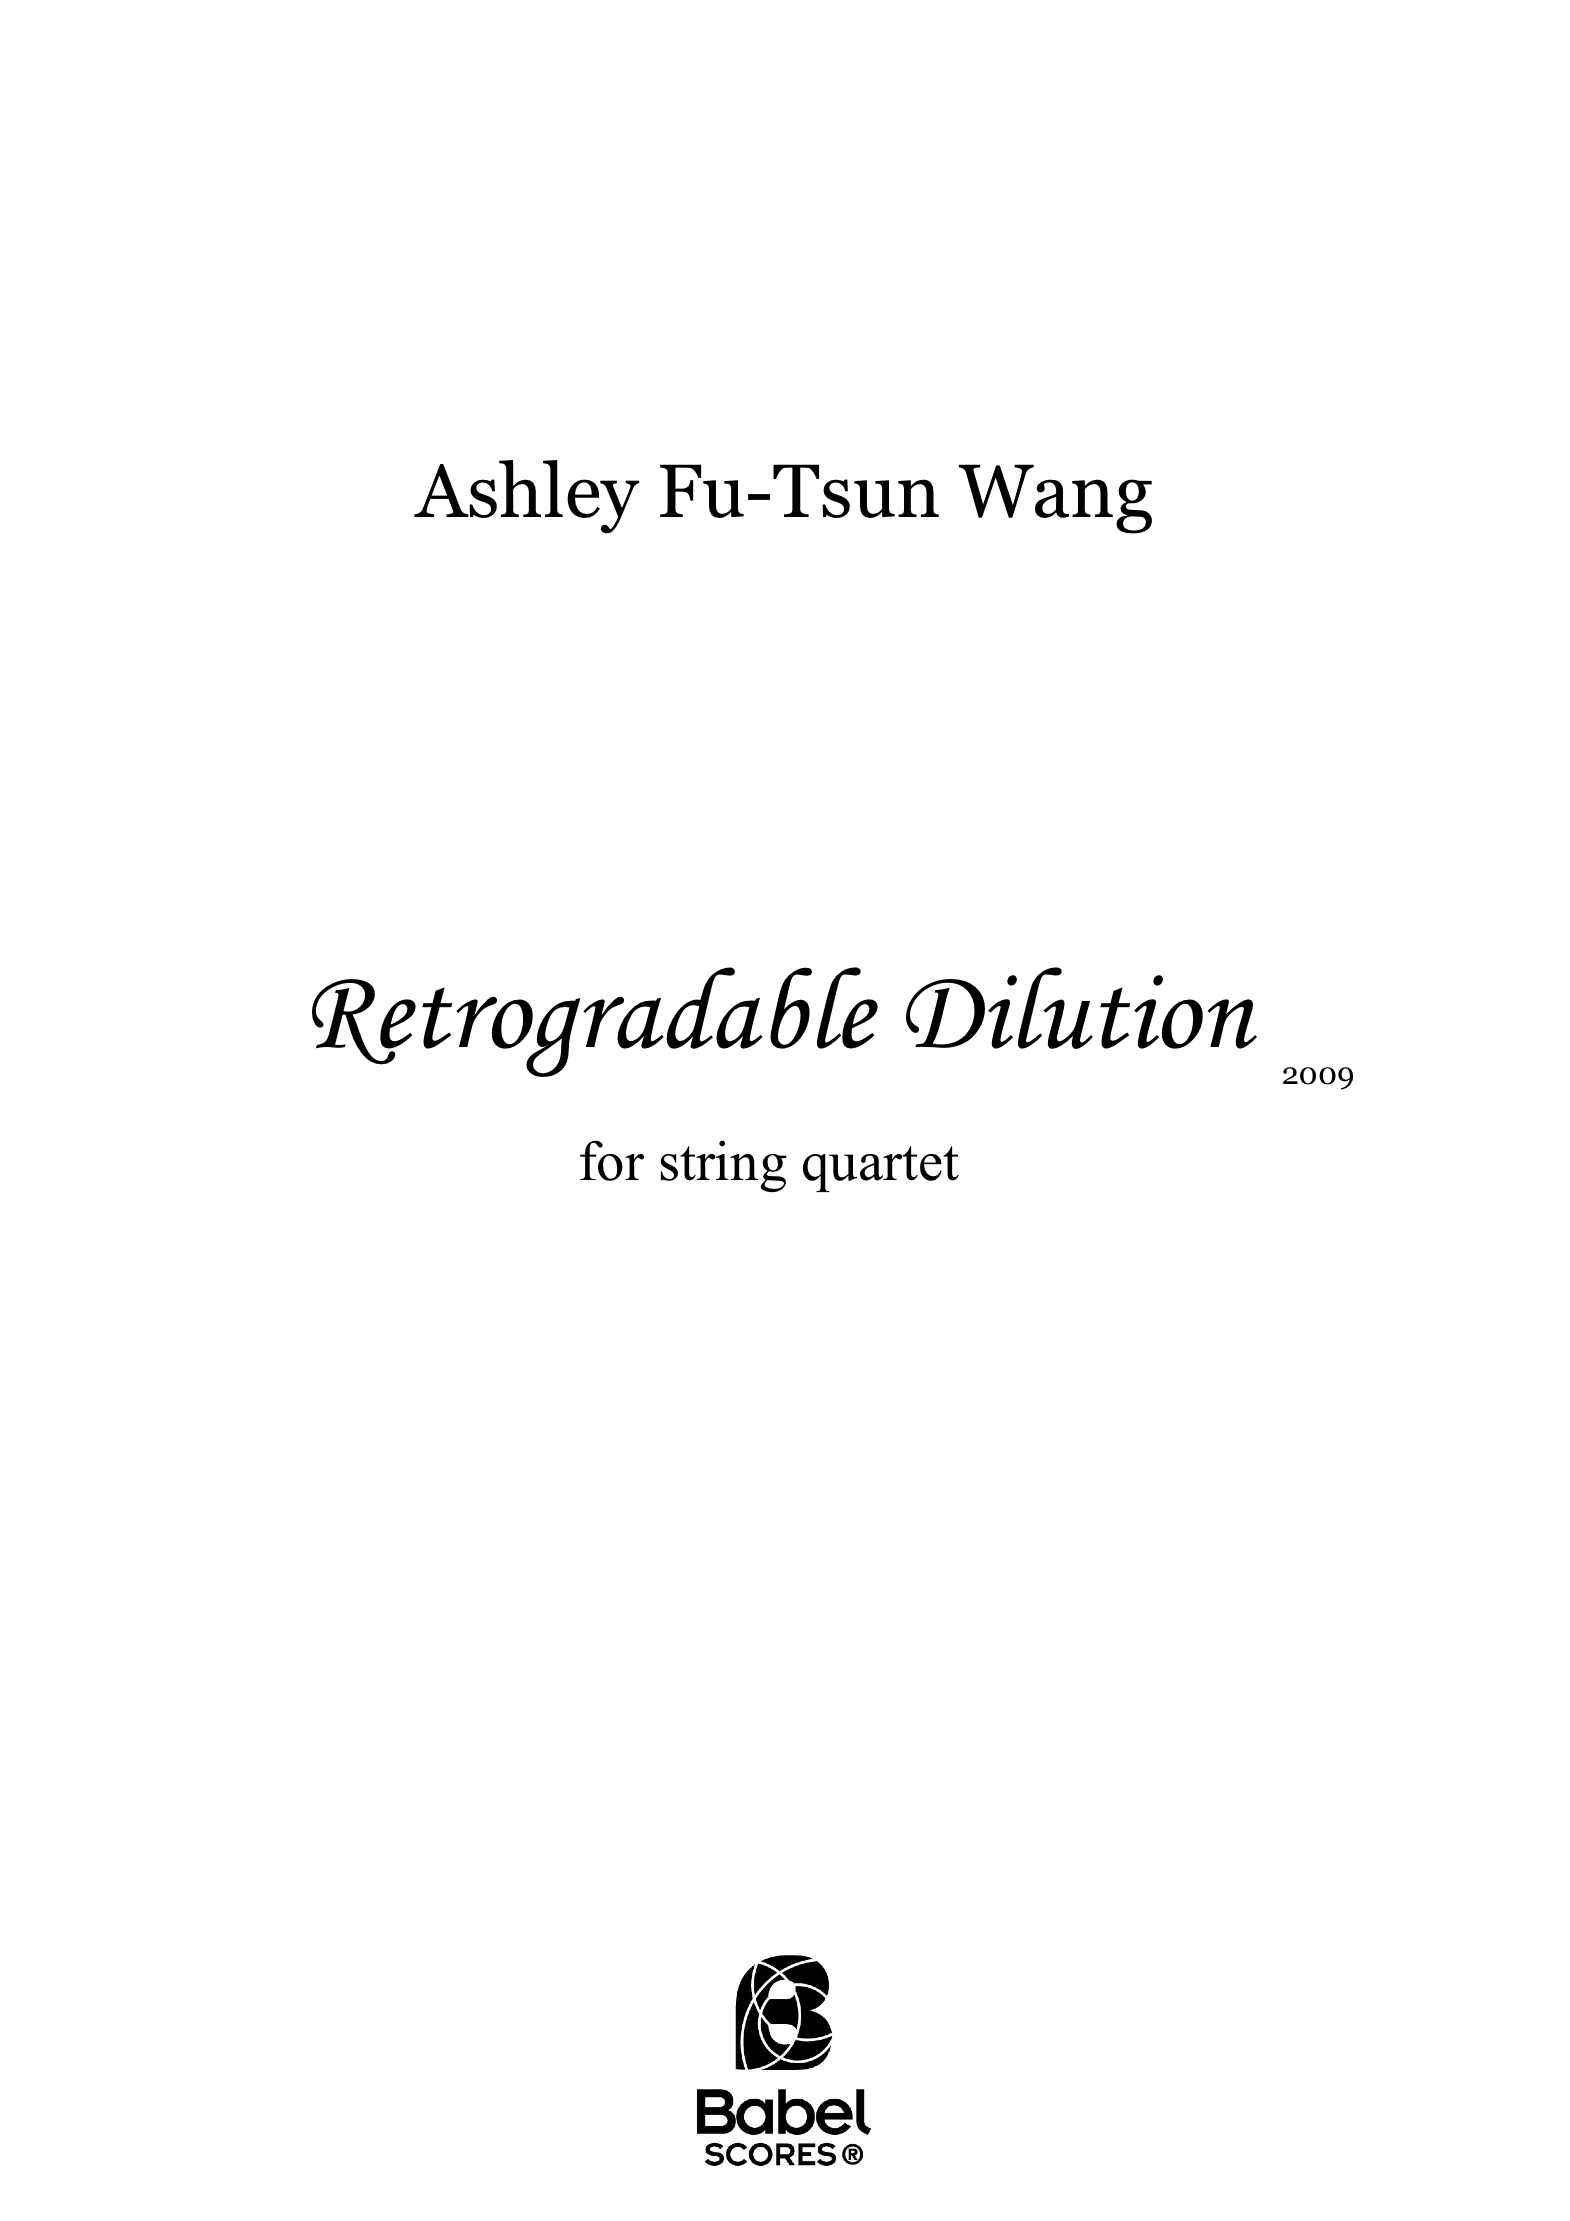 Retrogradable Dilution Ashley Fu Tsun Wang A4 z